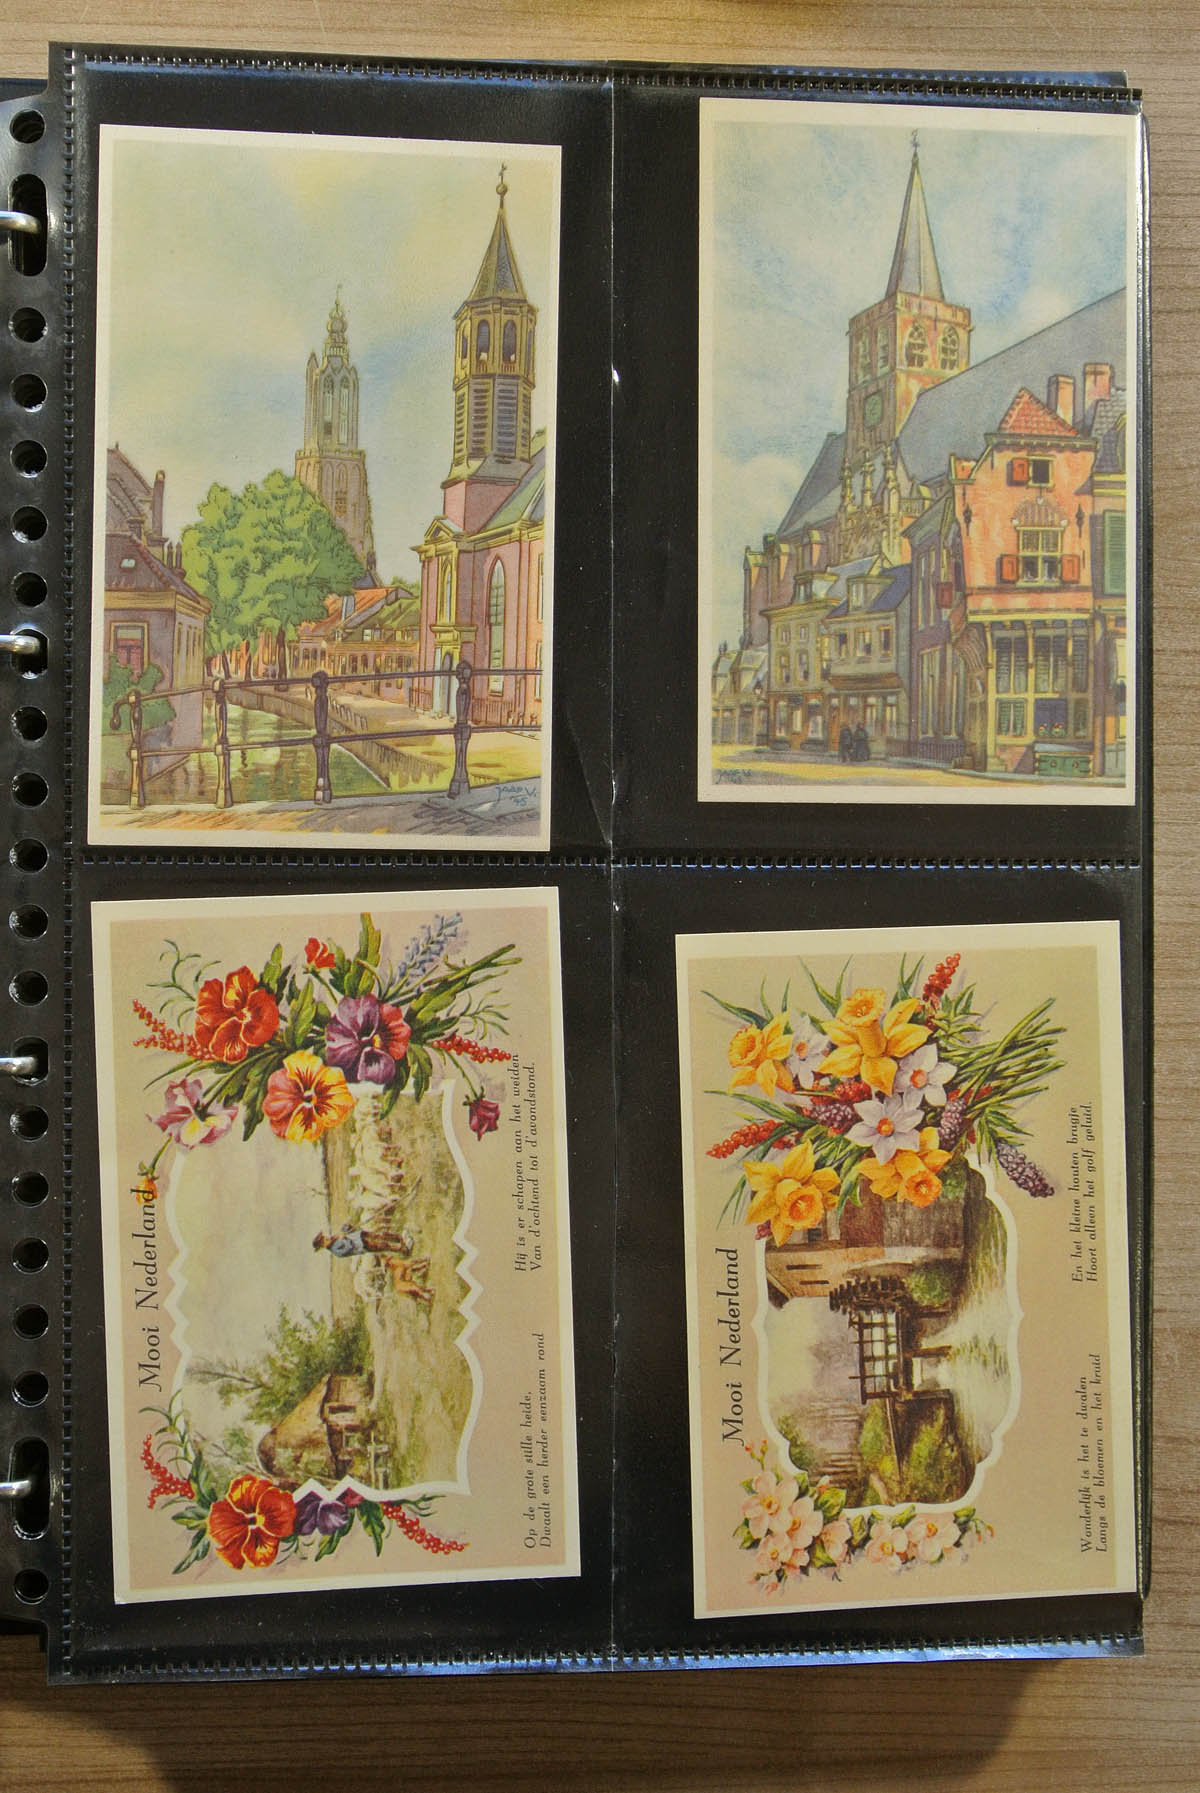 13066 009 - 13066 Netherlands picture postcards.